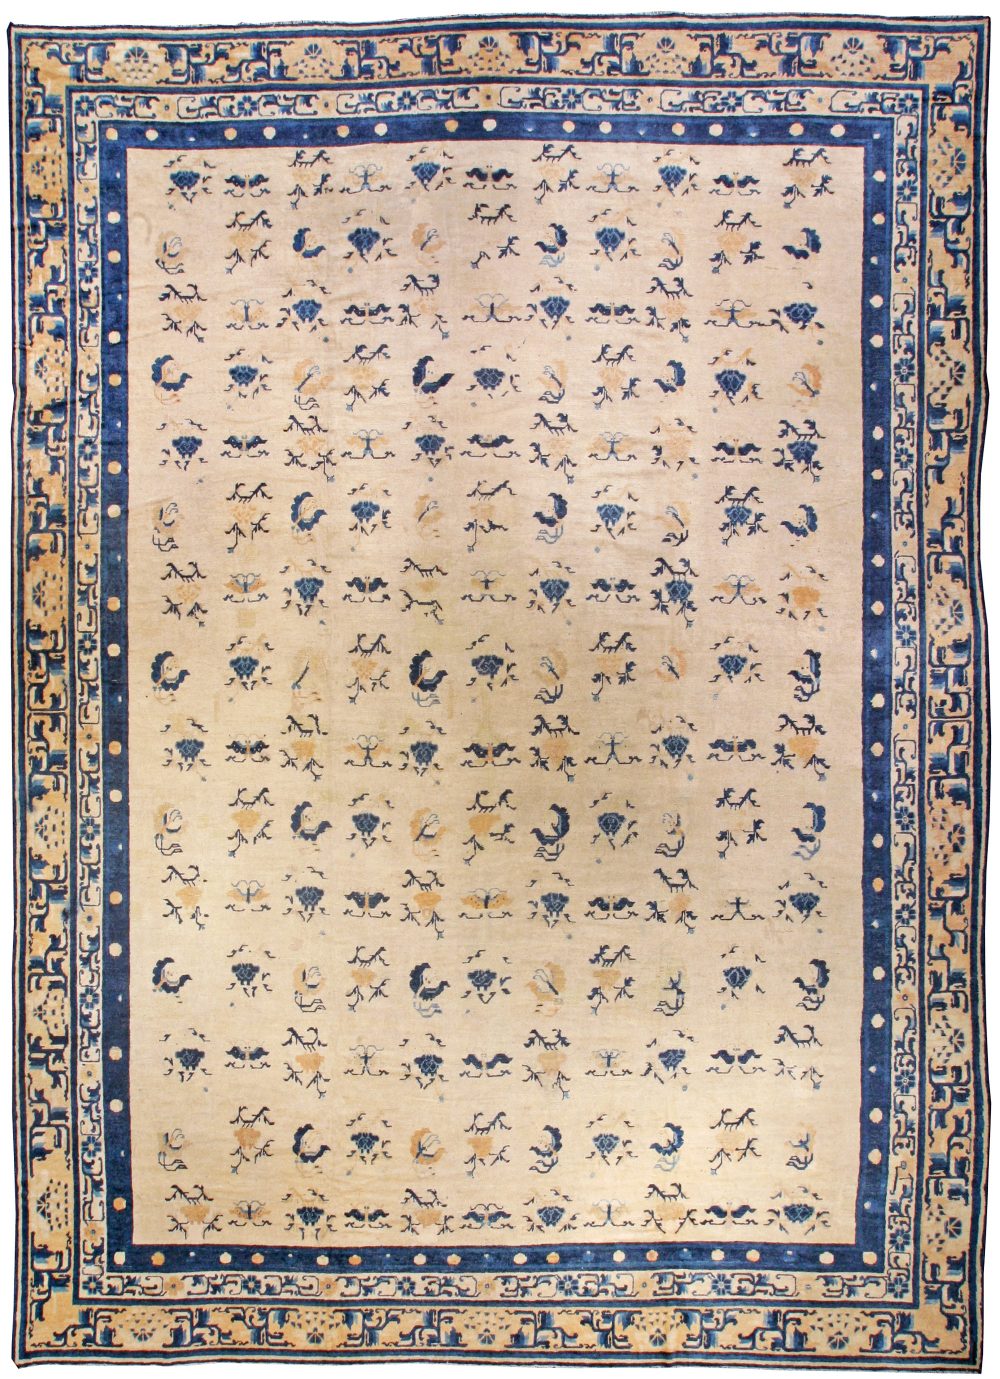 Authentic 19th Century Chinese Botanic, Beige, Blue Handmade Wool Carpet BB3574